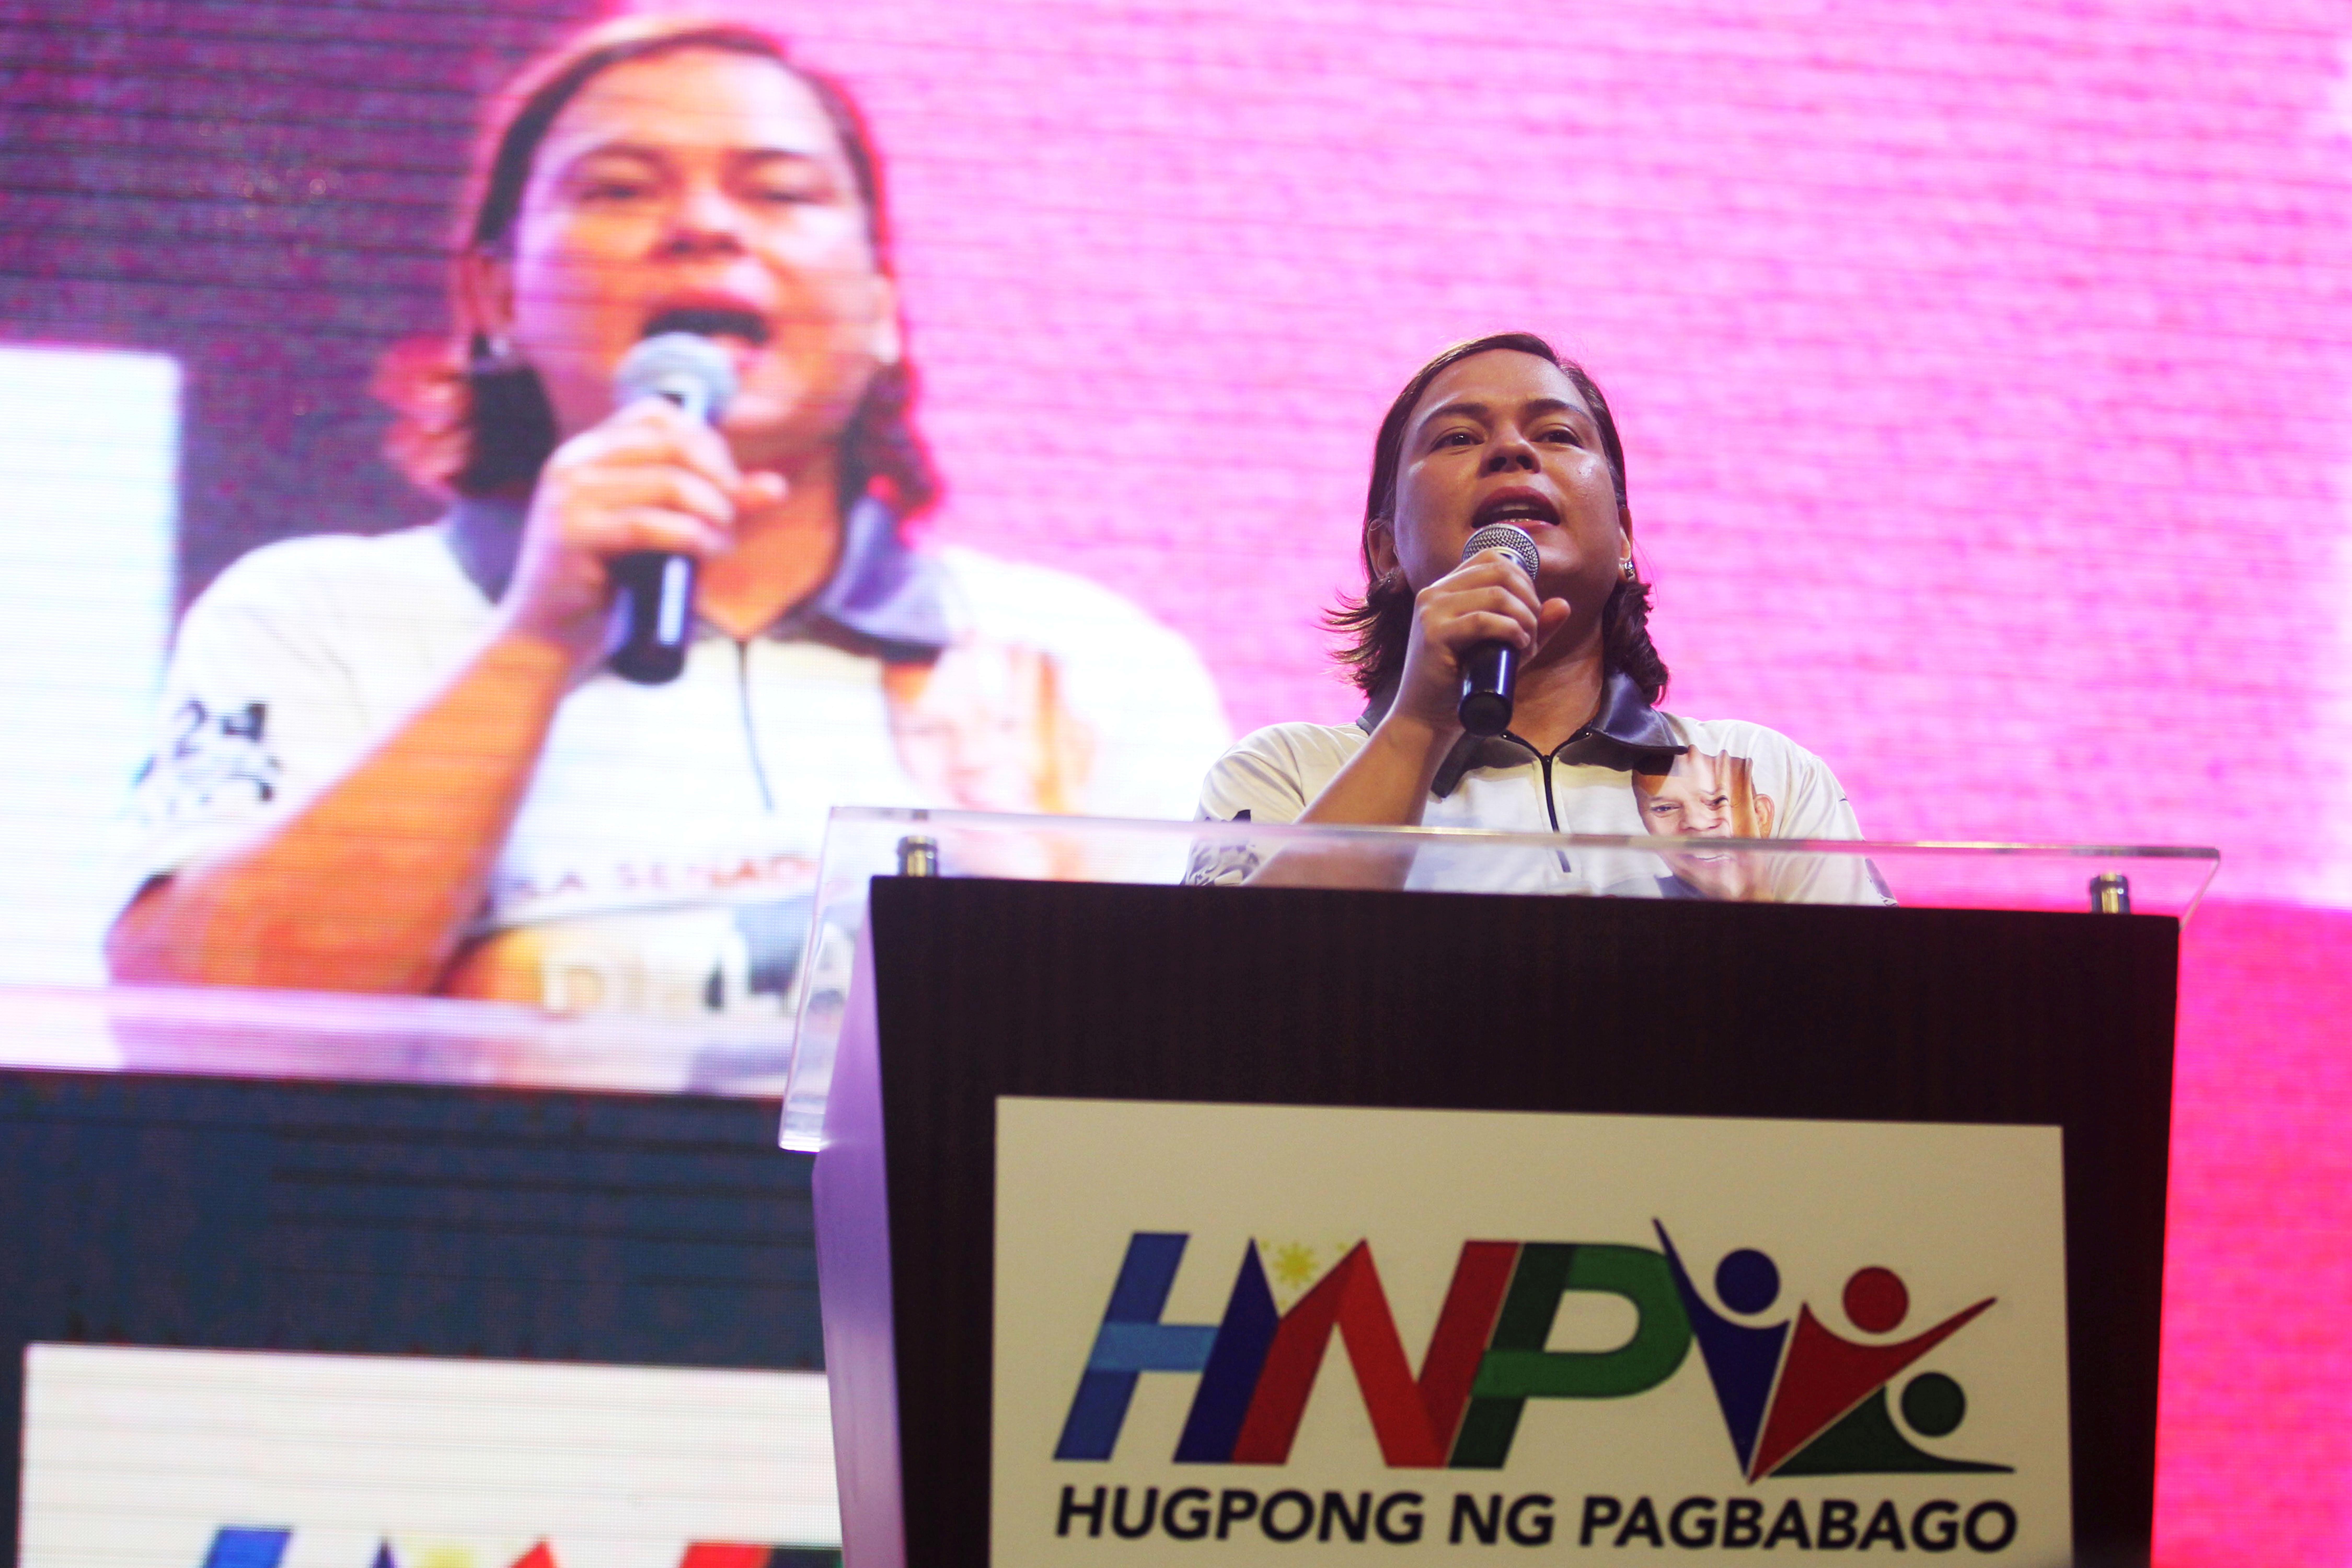 Sara Duterte, Davao City Mayor and daughter of Philippine President Rodrigo Duterte, delivers a speech during a senatorial campaign caravan for Hugpong Ng Pagbabago in Davao City